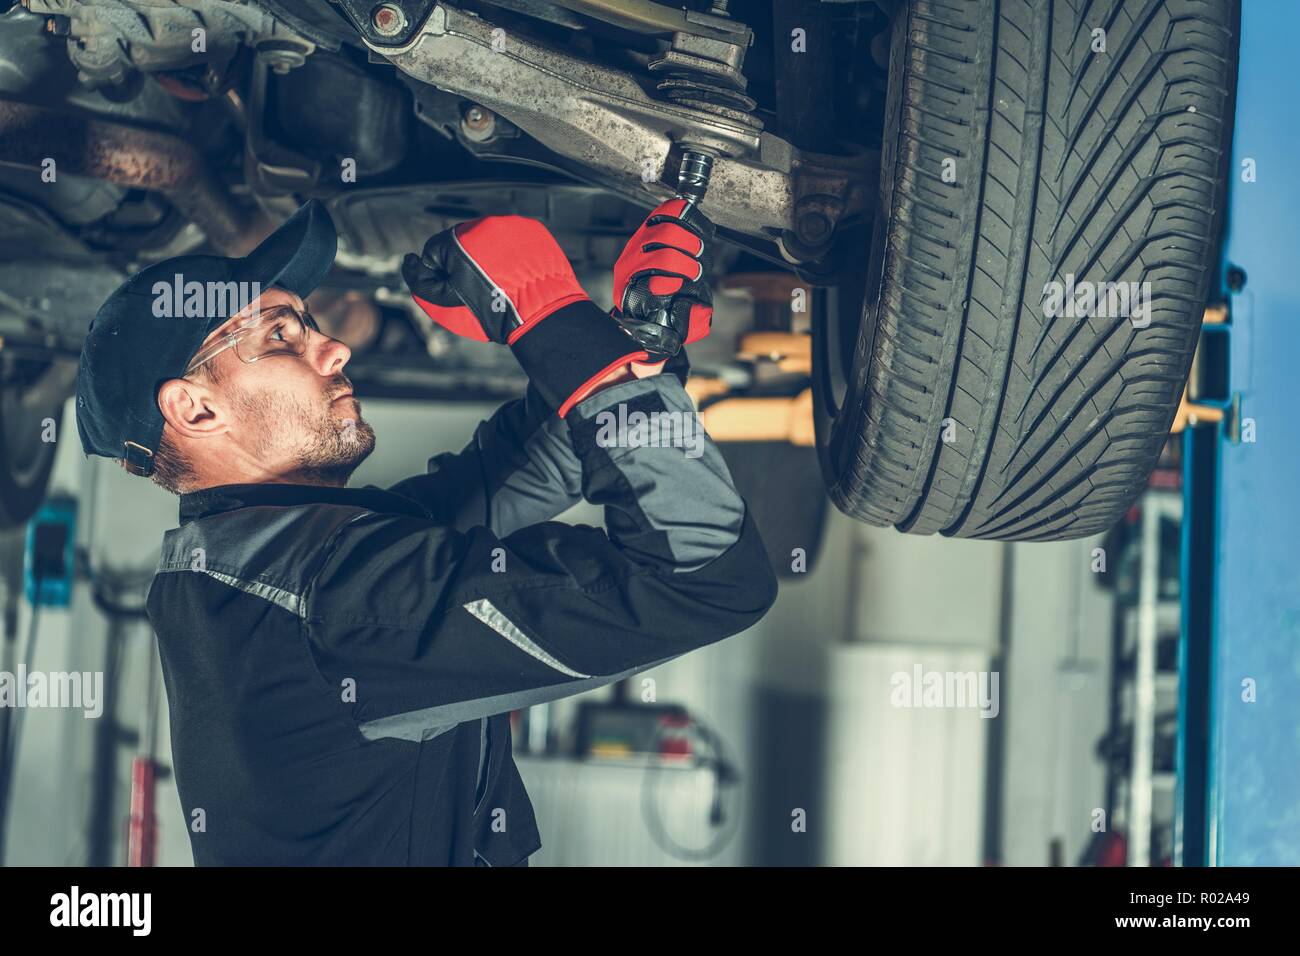 Caucasian Car Mechanic Adjusting Tension in Vehicle Suspension Element. Professional Automotive Service. Stock Photo